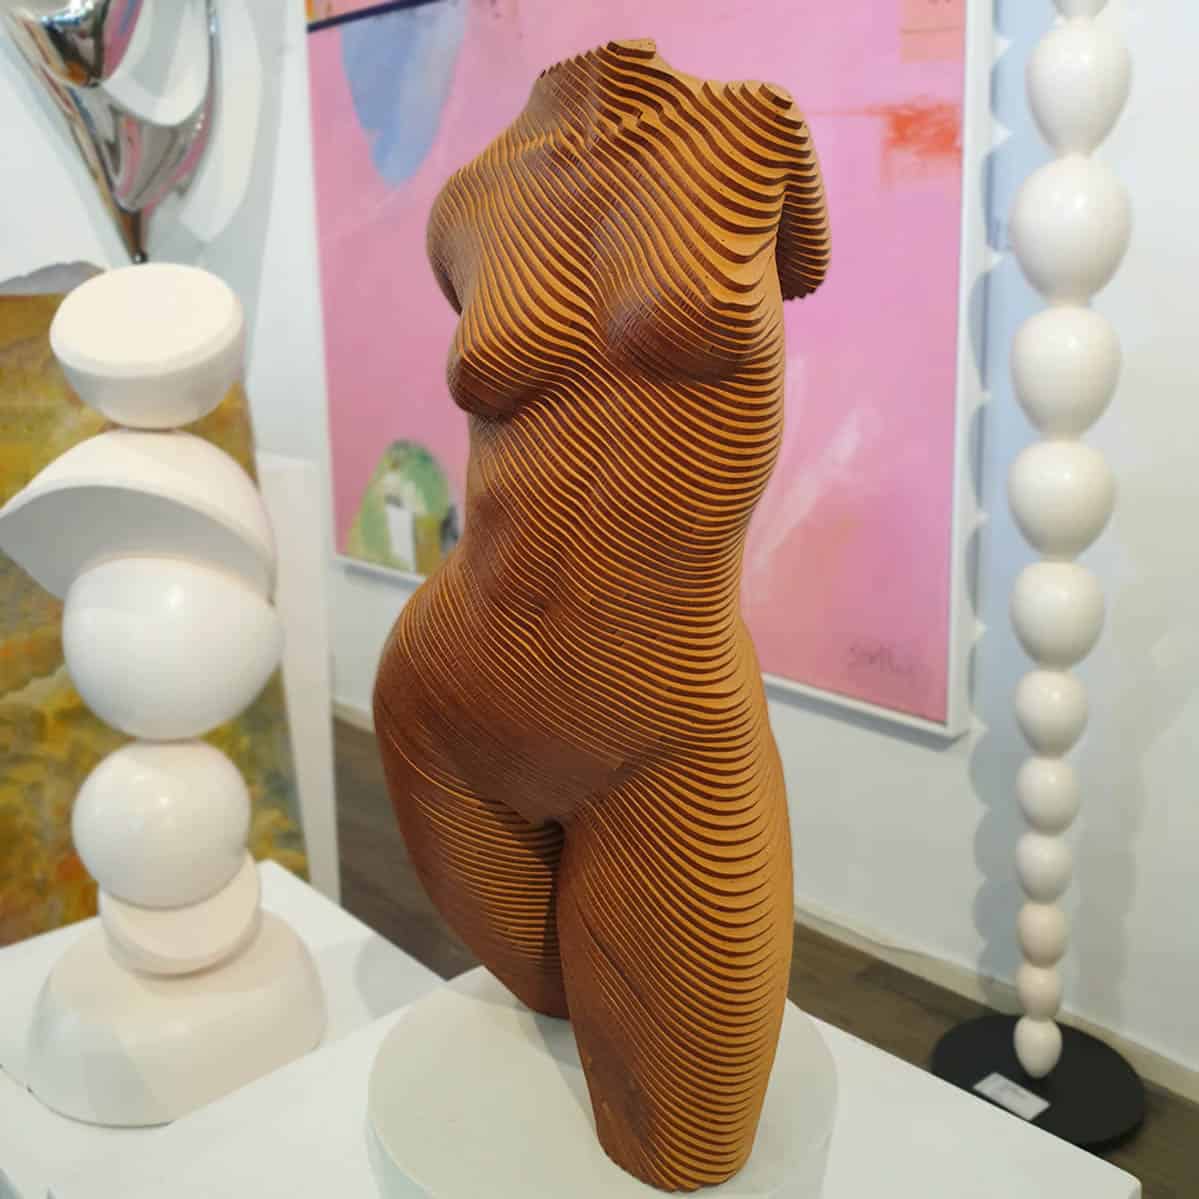 Roxie-Timber-45x20cm-TIMBER--LASER-CUT-[table-top,figurative]Olivier-Duhamel-female-body-sculpture-nude-wood-form-australian